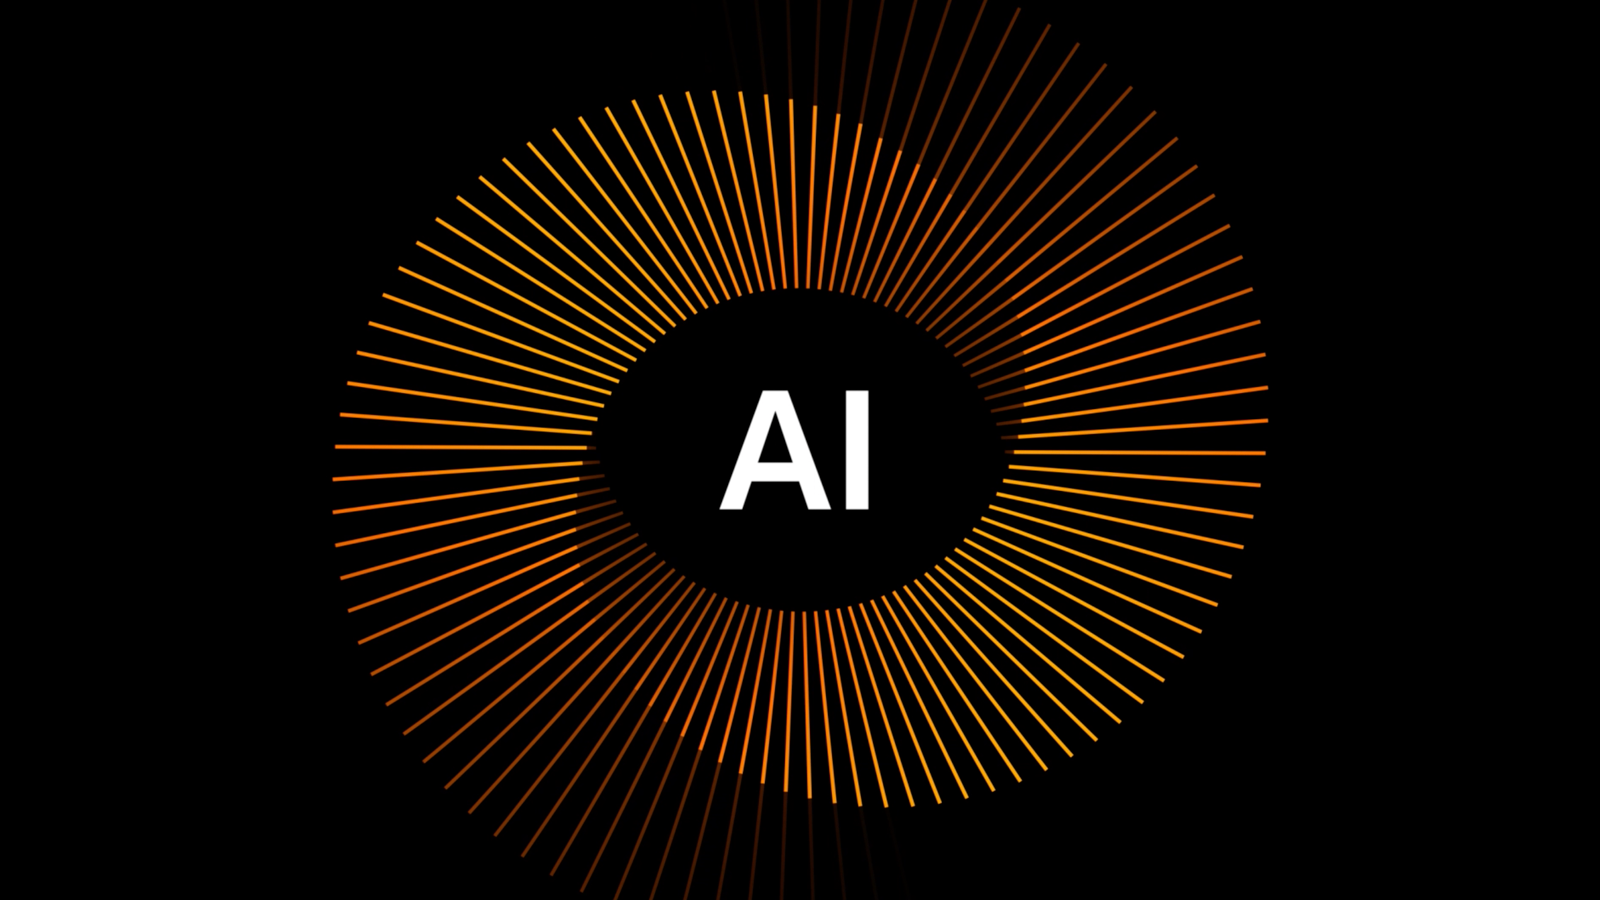 Orange lines circle around "AI" on a black background.